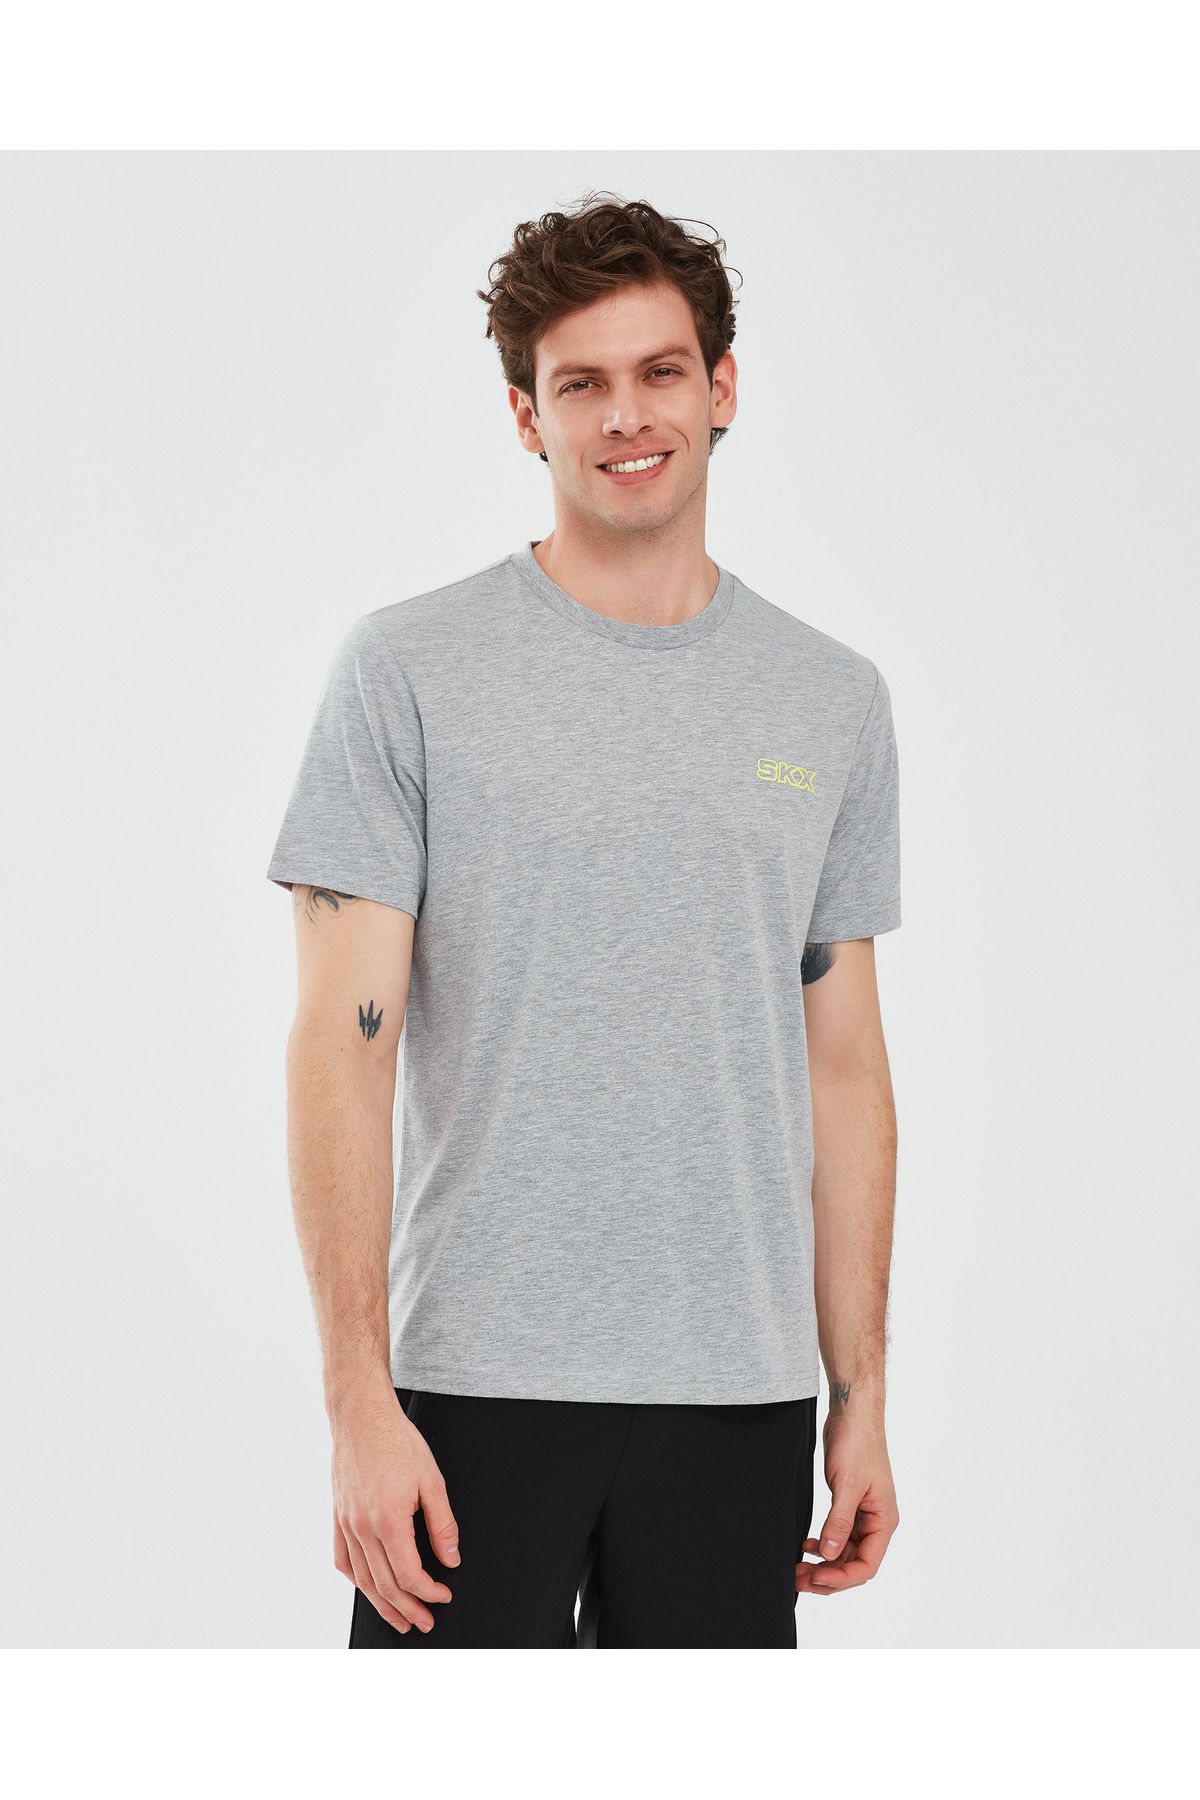 Skechers Graphic T-shirt M Short Sleeve Erkek Gri Tshirt S241054-036